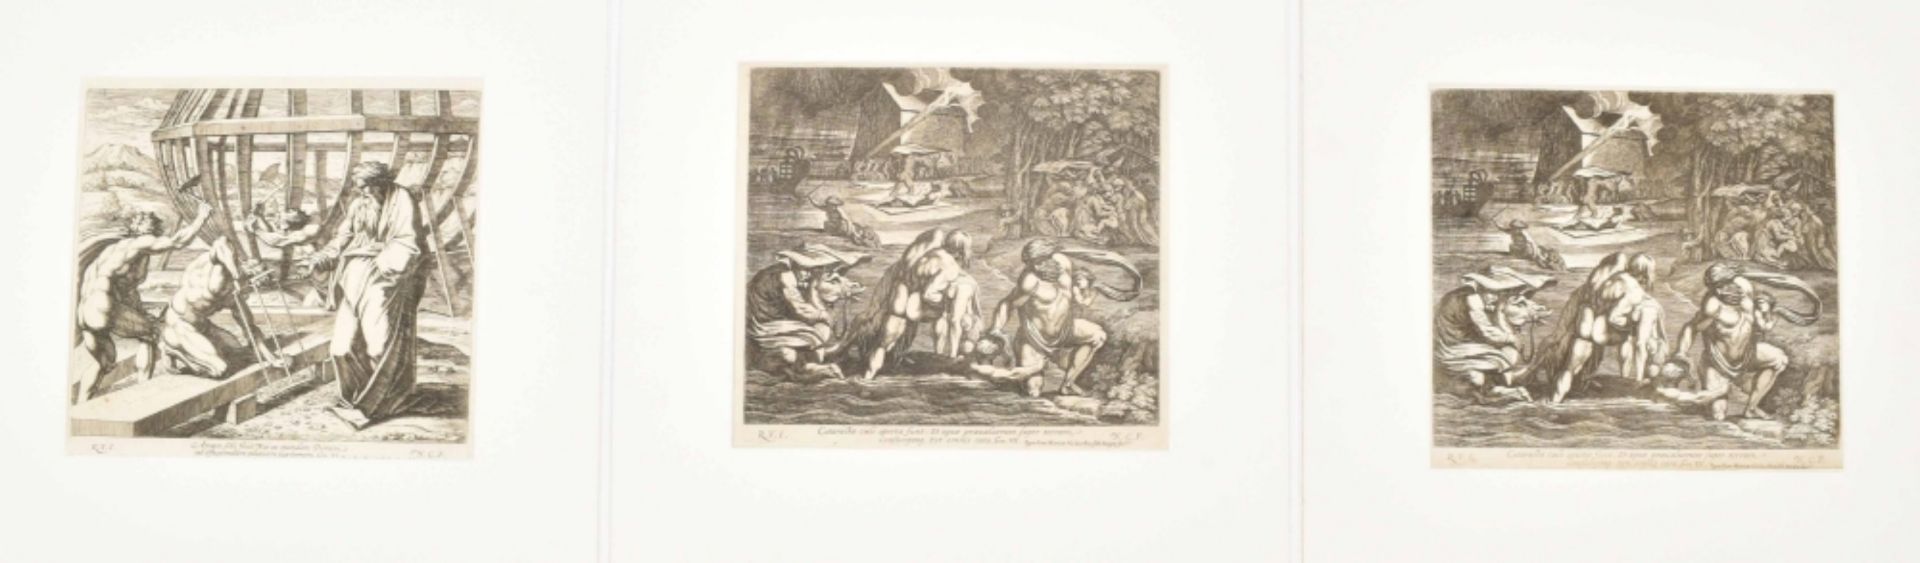 Niocolas Chaperon (1612-1656) after Raphael (1483-1520). Two prints of Noah's ark